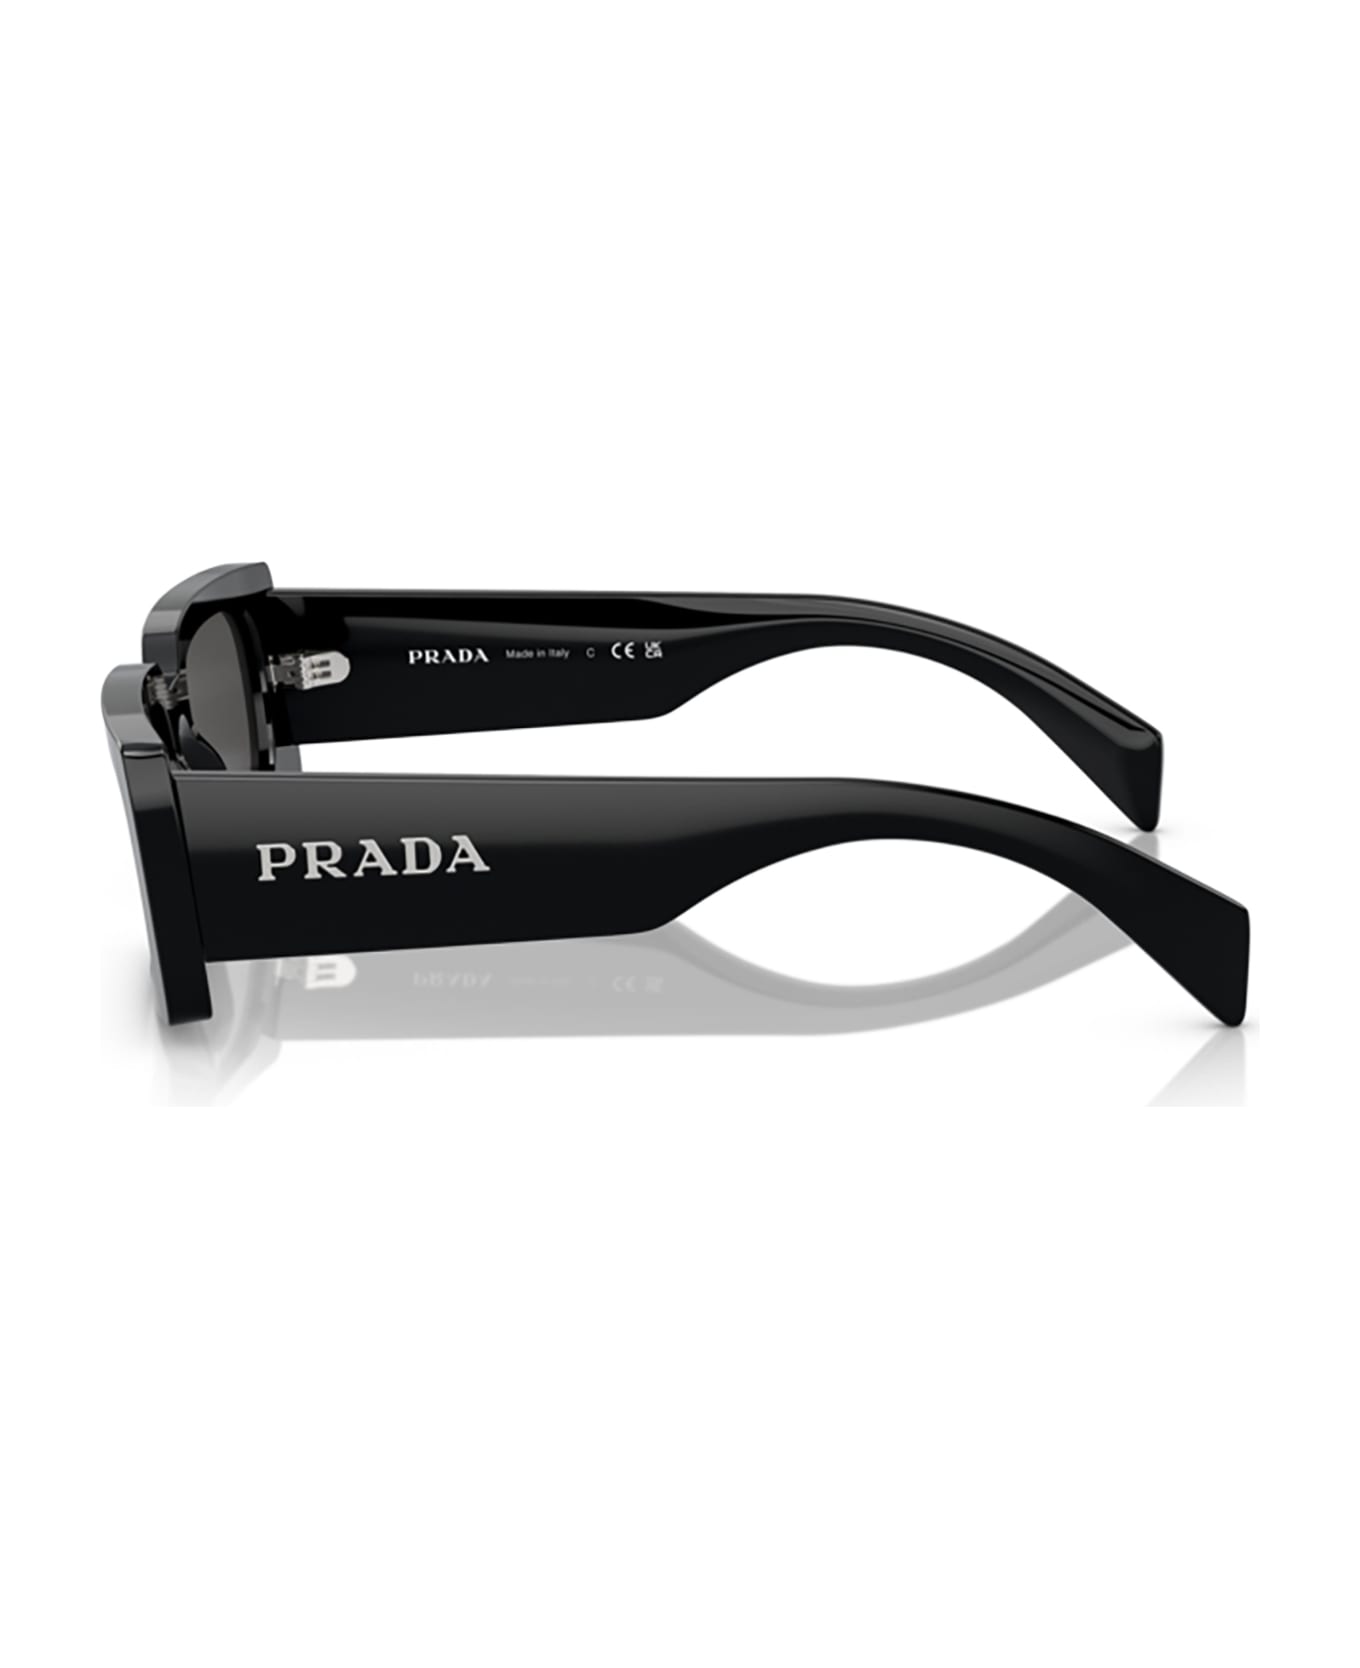 Prada Eyewear Pr A07s Black Sunglasses - Black サングラス